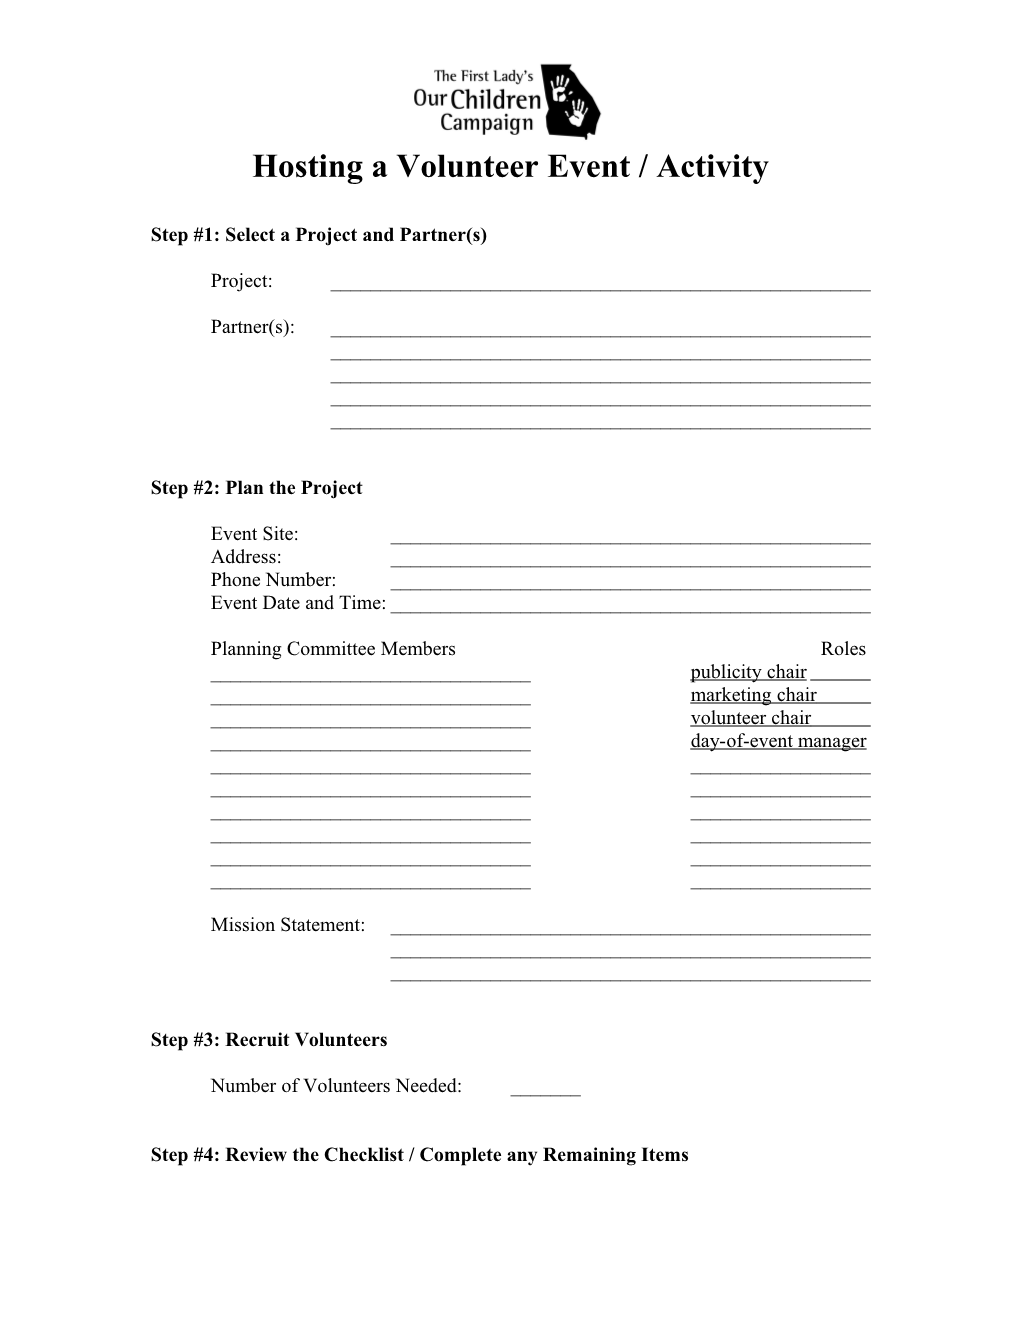 Hosting a Volunteer Event / Activity